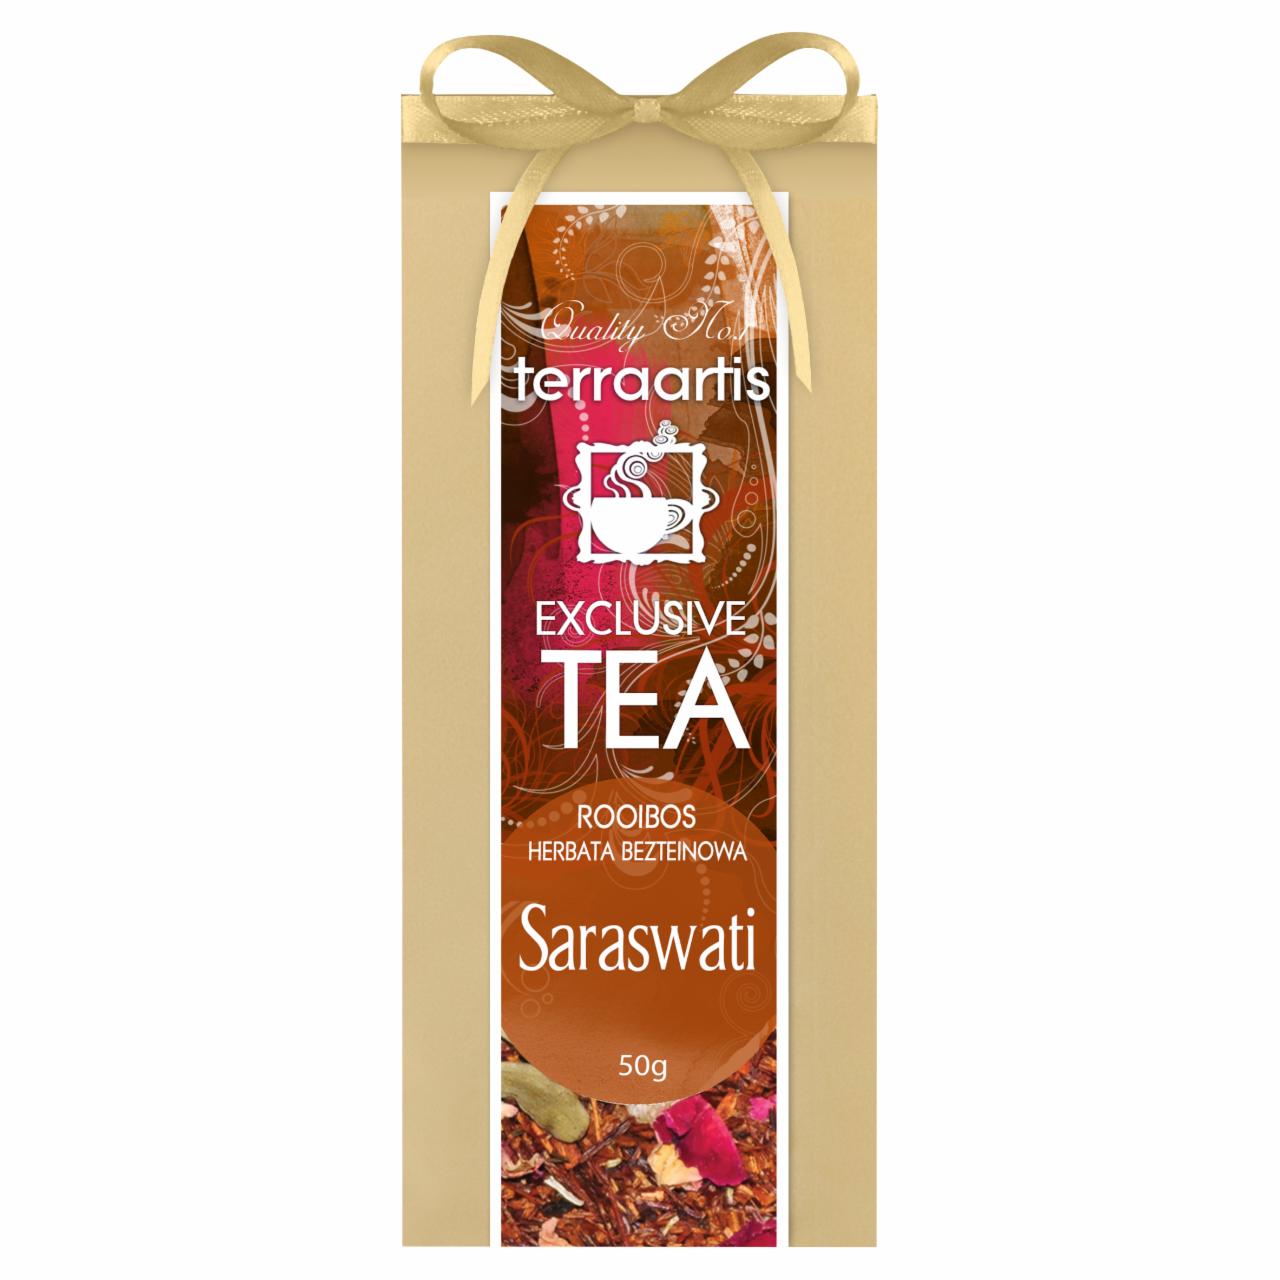 Zdjęcia - Terraartis Exclusive Tea Herbata bezteinowa Rooibos Saraswati 50 g